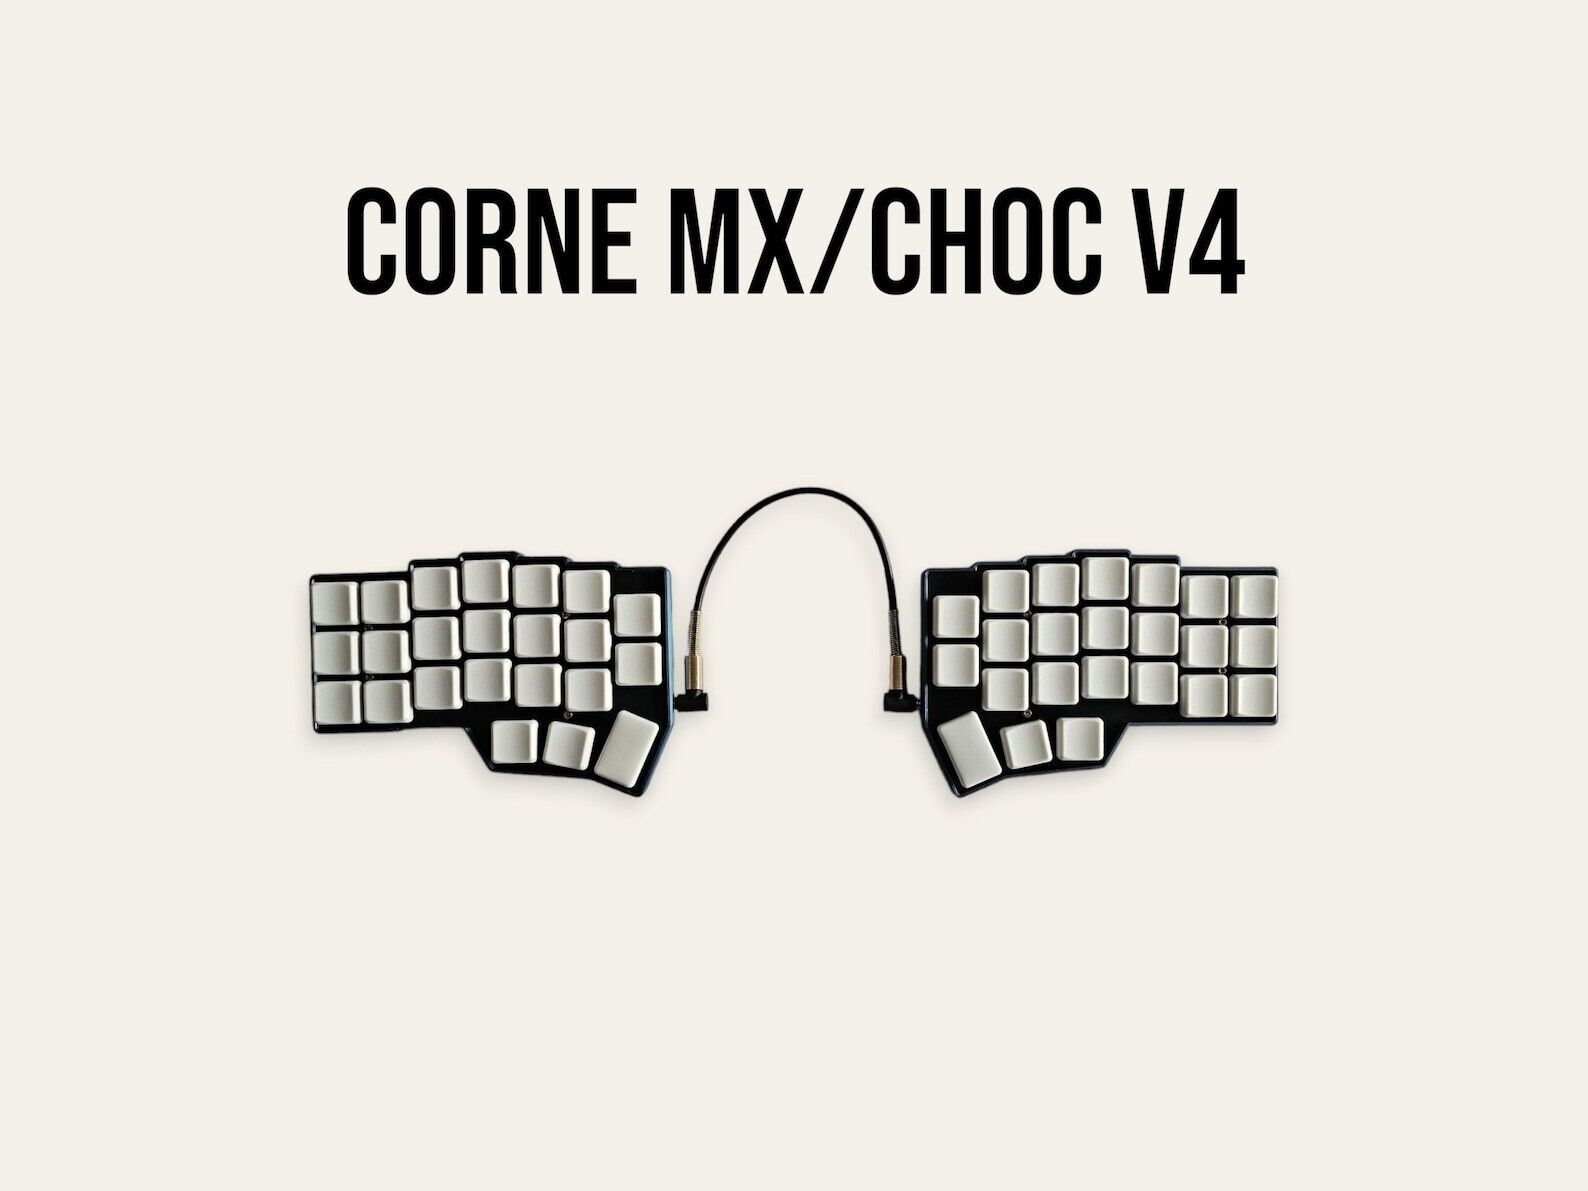 Corne MX/Choc v4 - Fully Assembled Split Ergonomic Keyboard with RGB Backlights